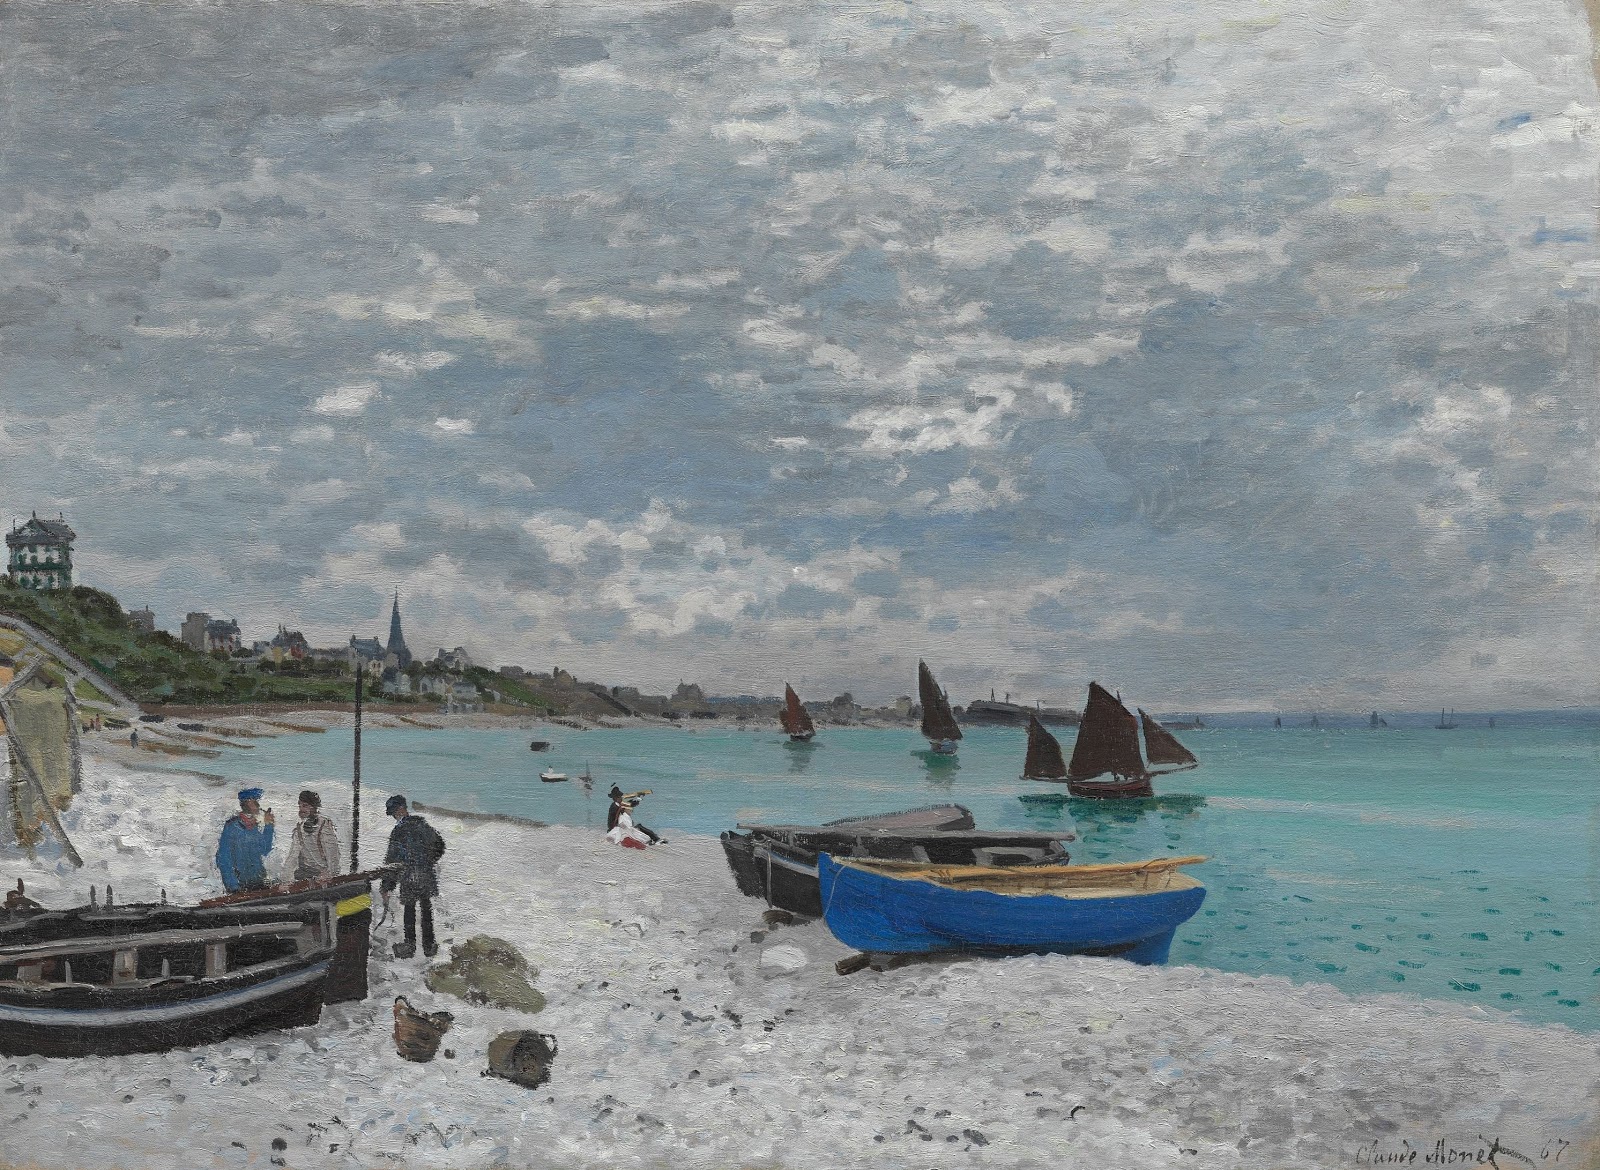 Claude+Monet-1840-1926 (730).jpg